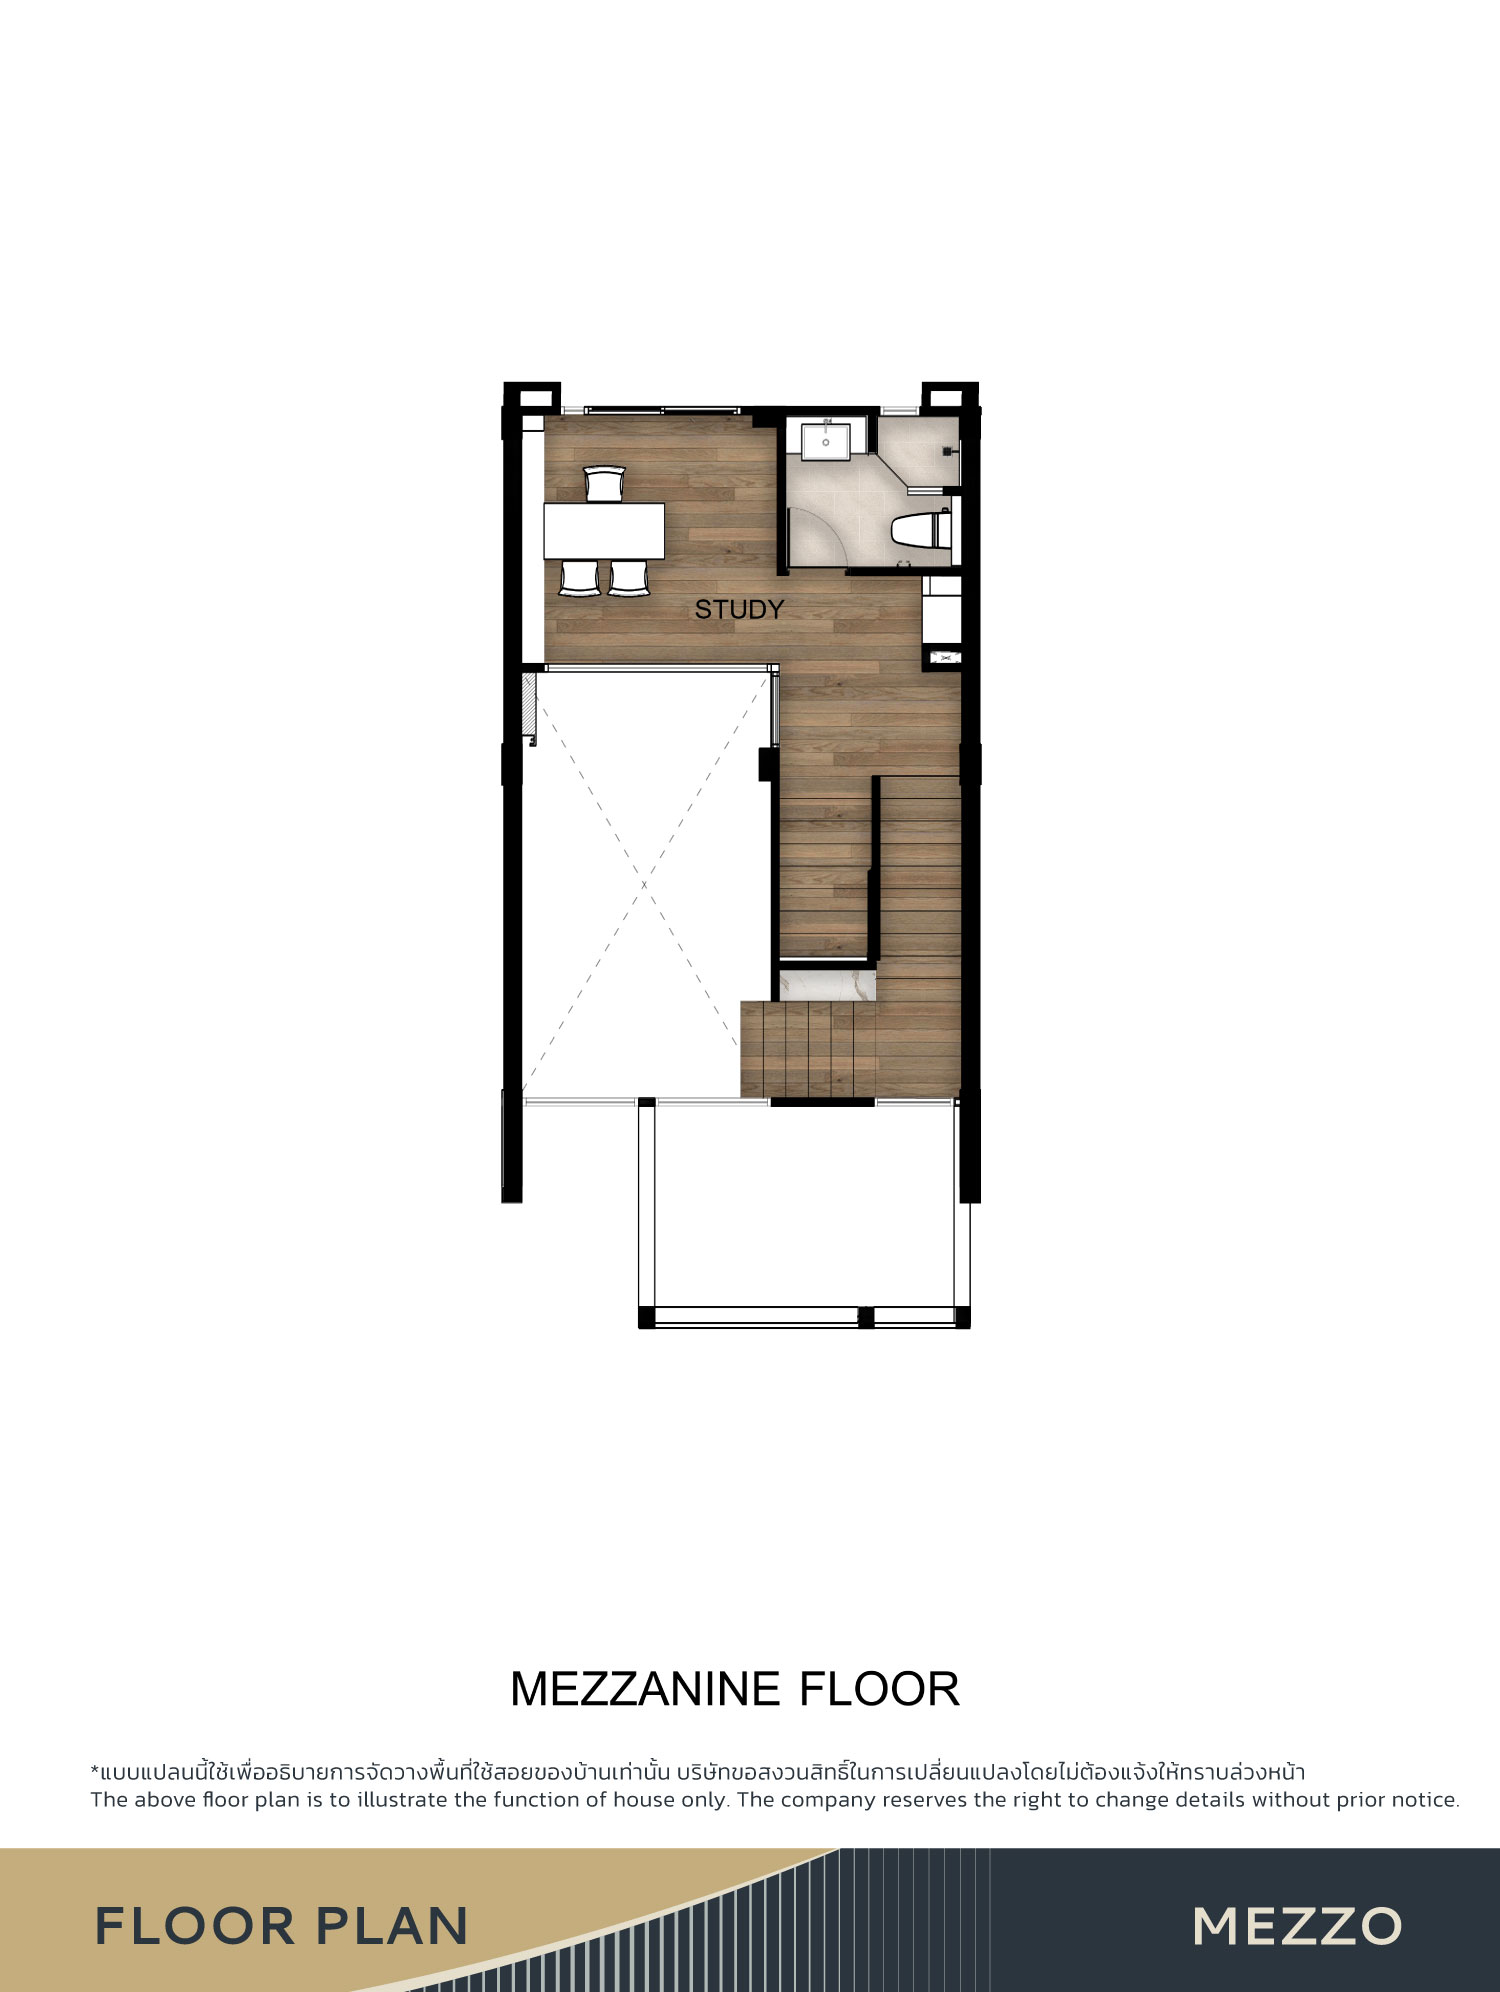 Mezzanine floor